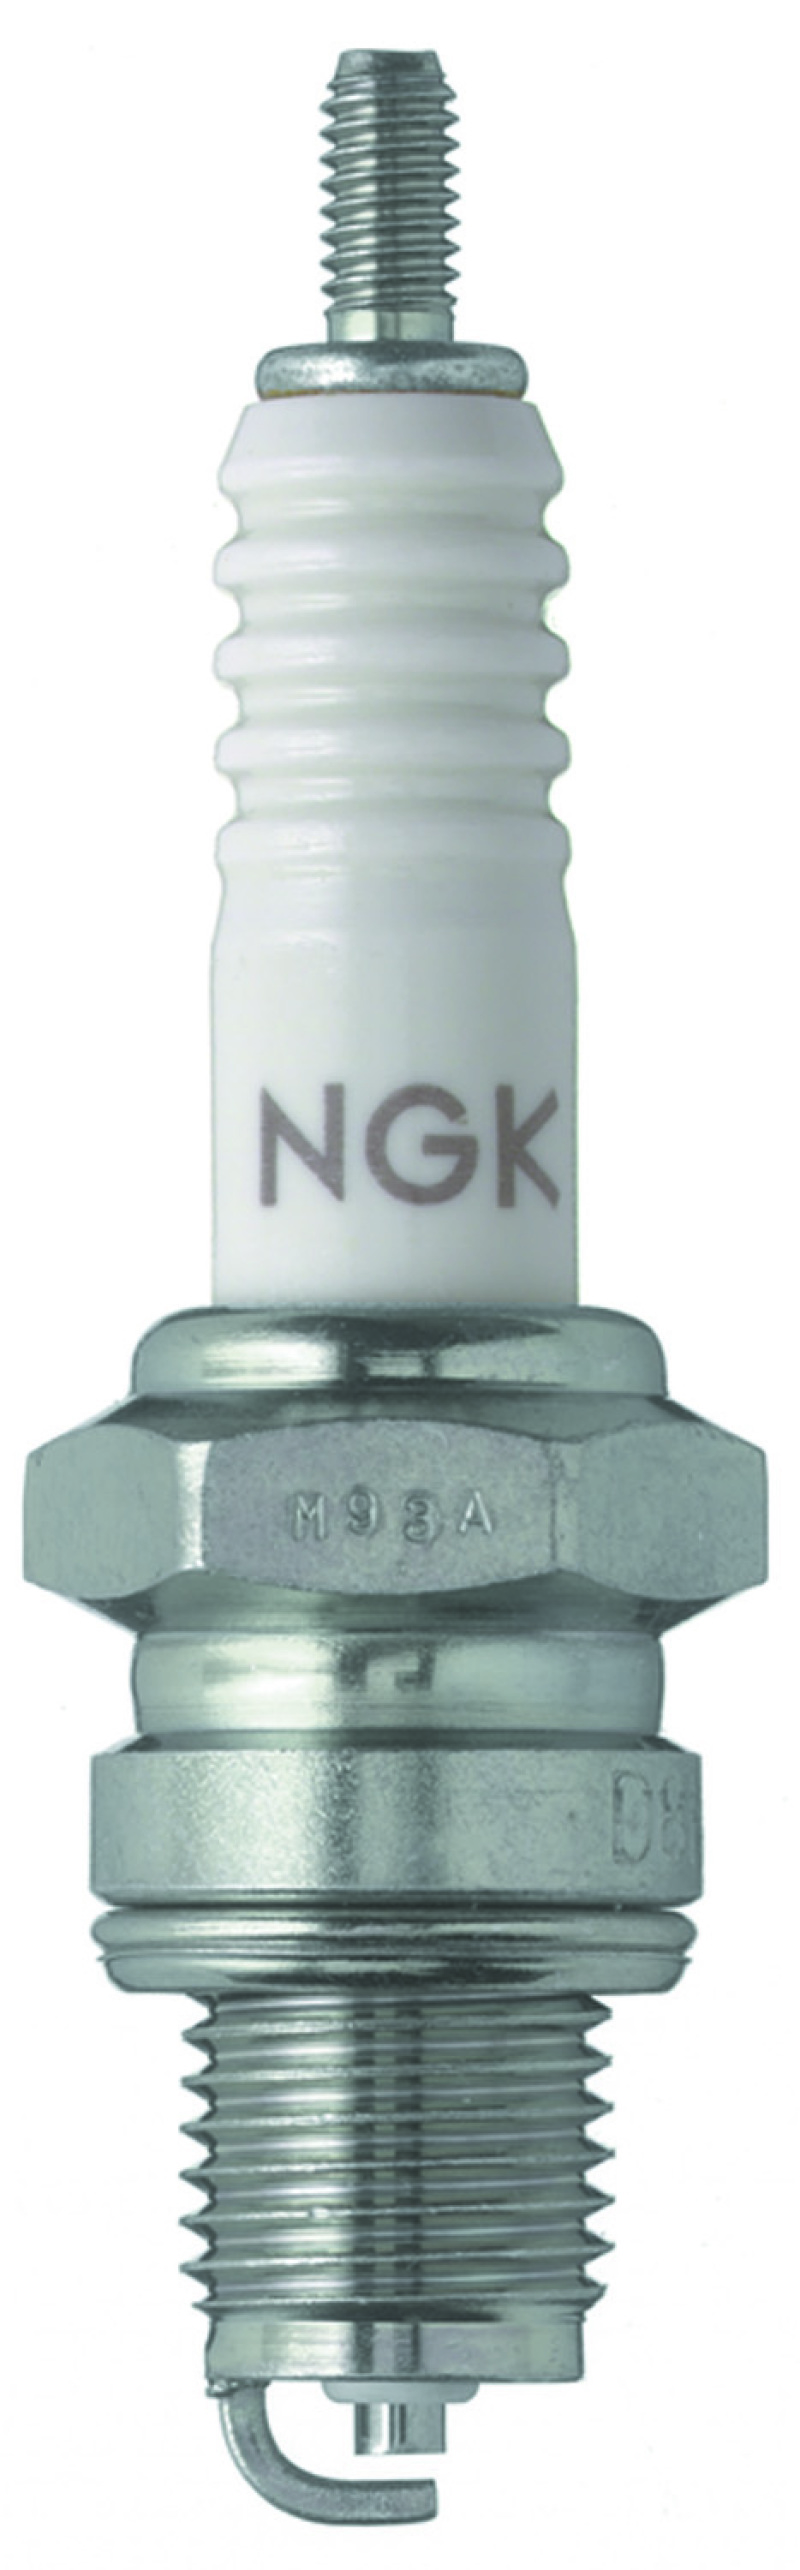 NGK Standard Spark Plug Box of 10 (D8HA) - 7112